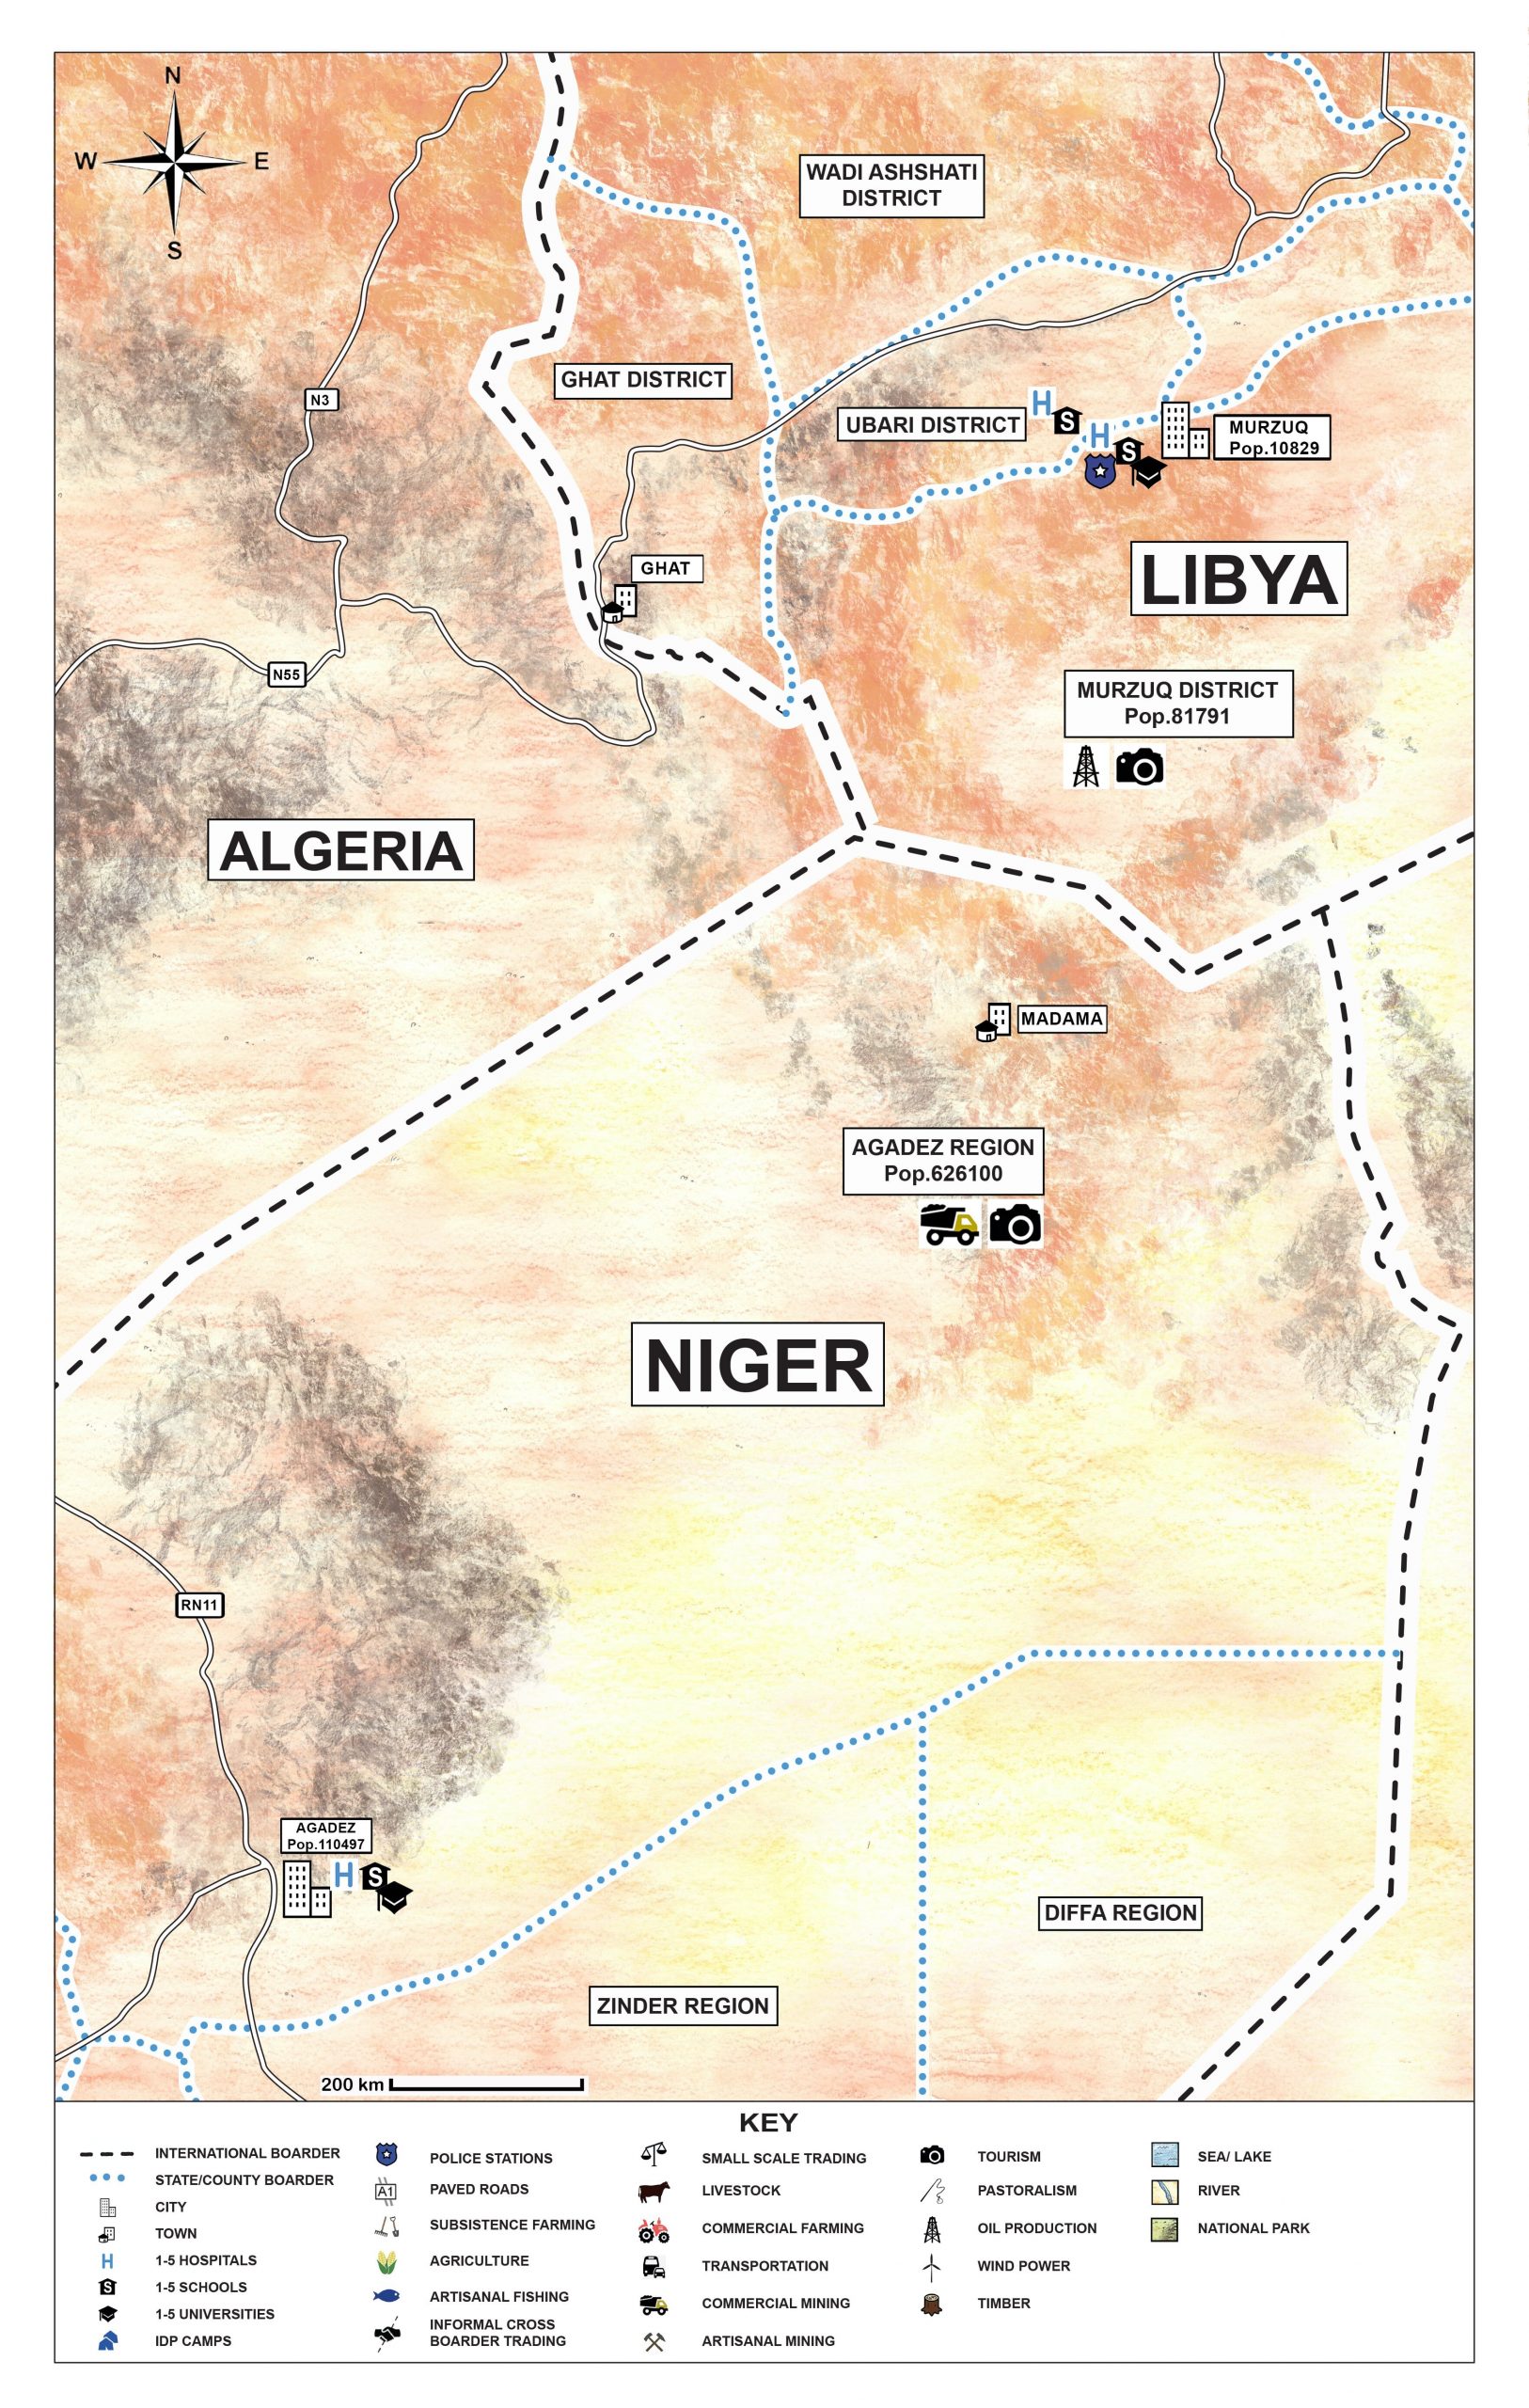 LIBYA - NIGER_illustration